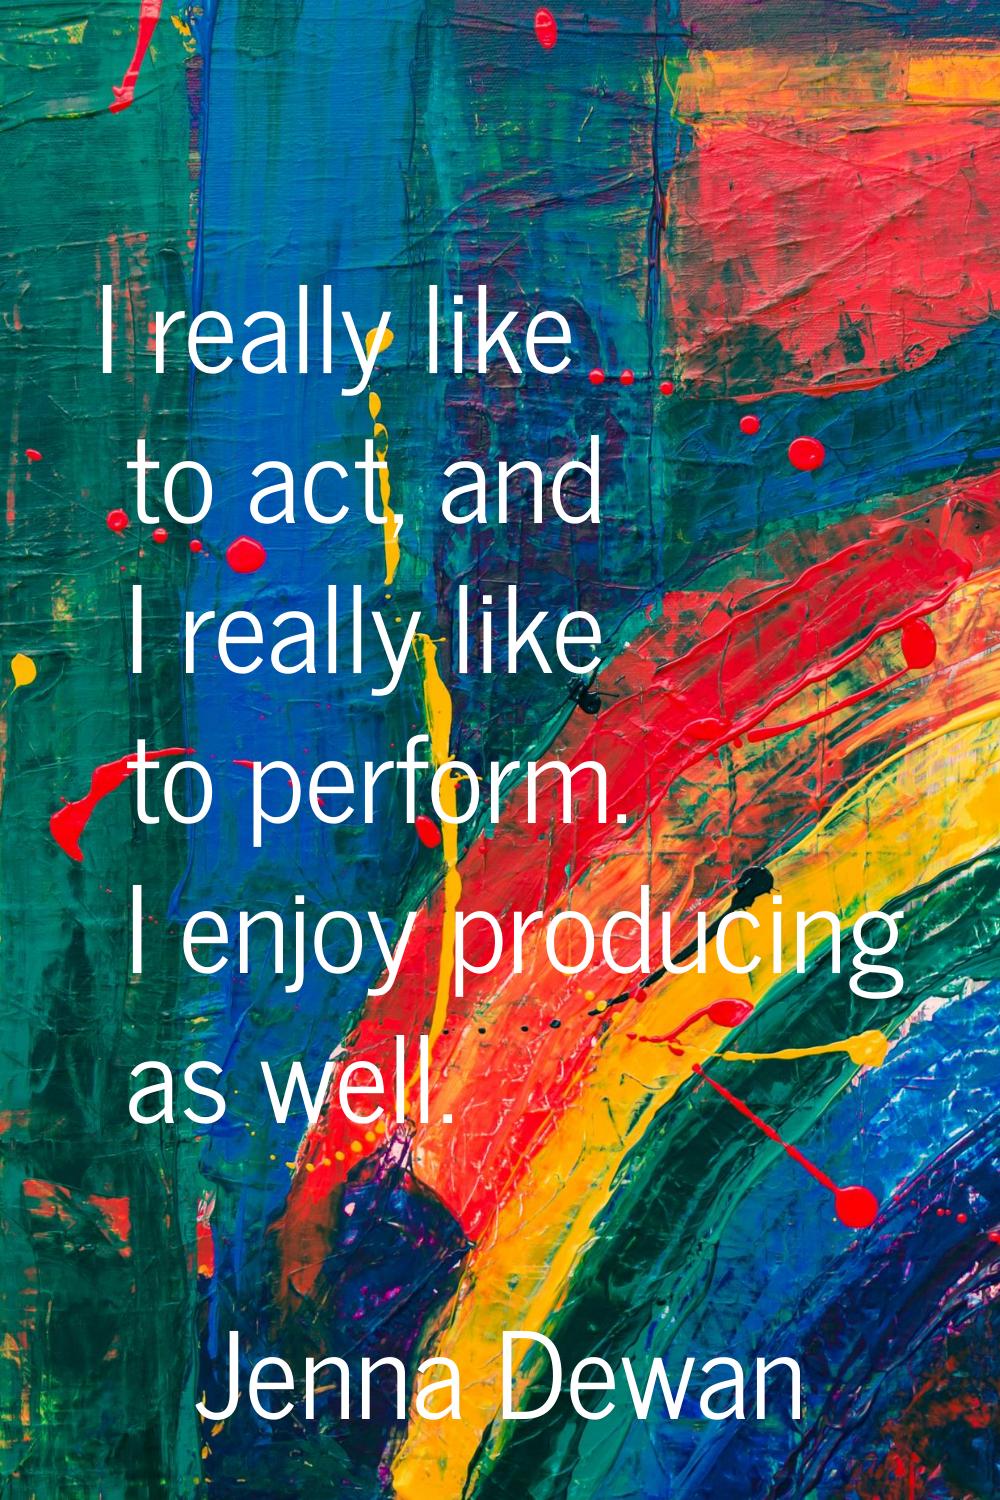 I really like to act, and I really like to perform. I enjoy producing as well.